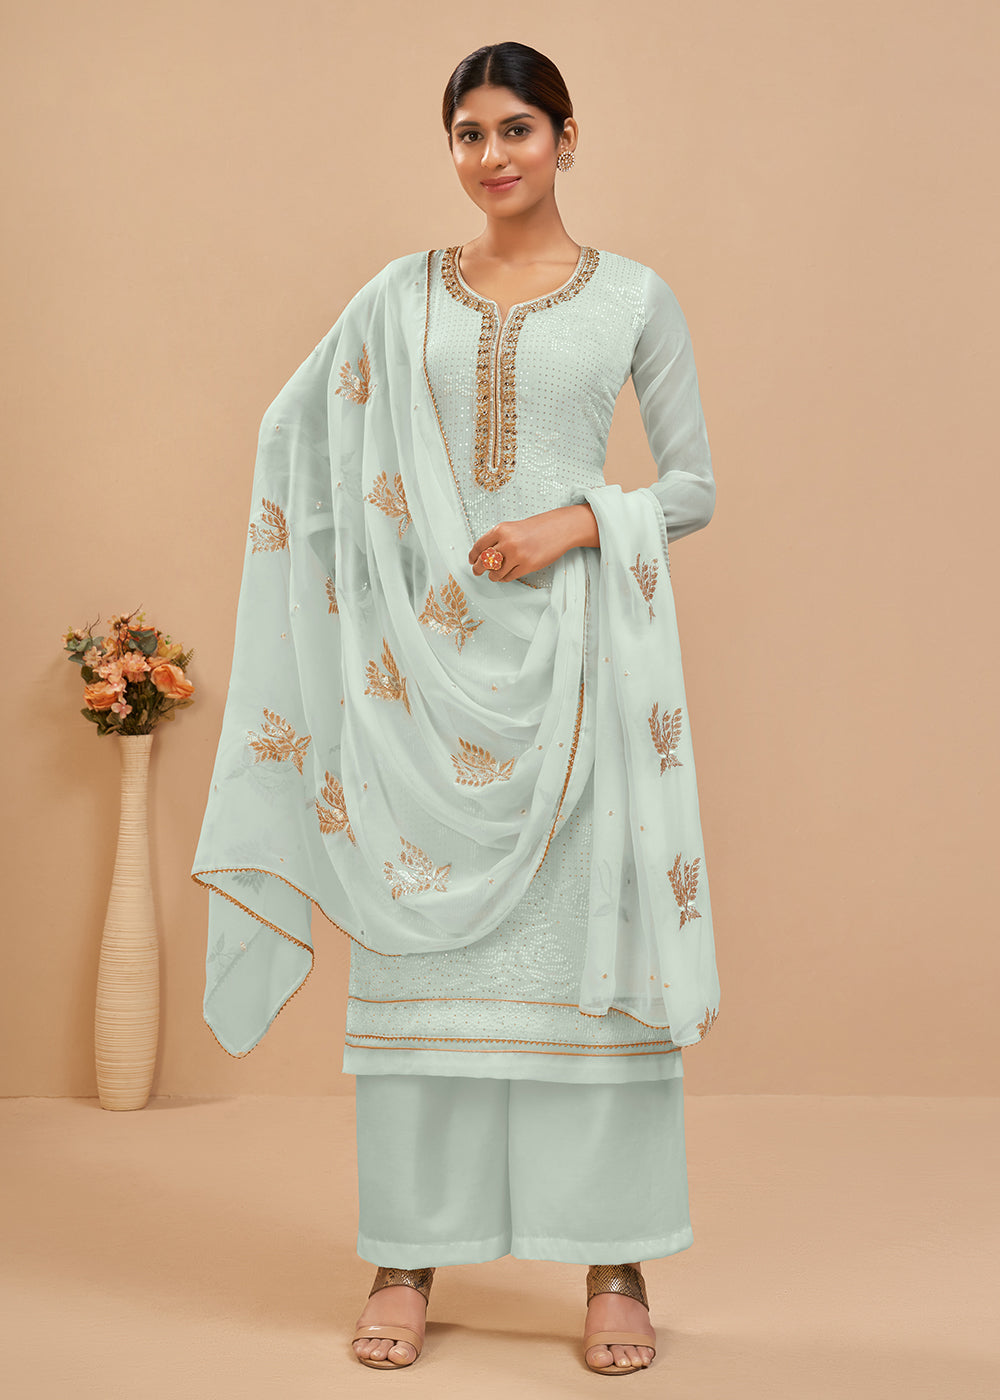 Buy Now Tempting Light Blue Sequins & Khatli Work Festive Palazzo Salwar Suit Online in USA, UK, Canada, Germany, Australia & Worldwide at Empress Clothing